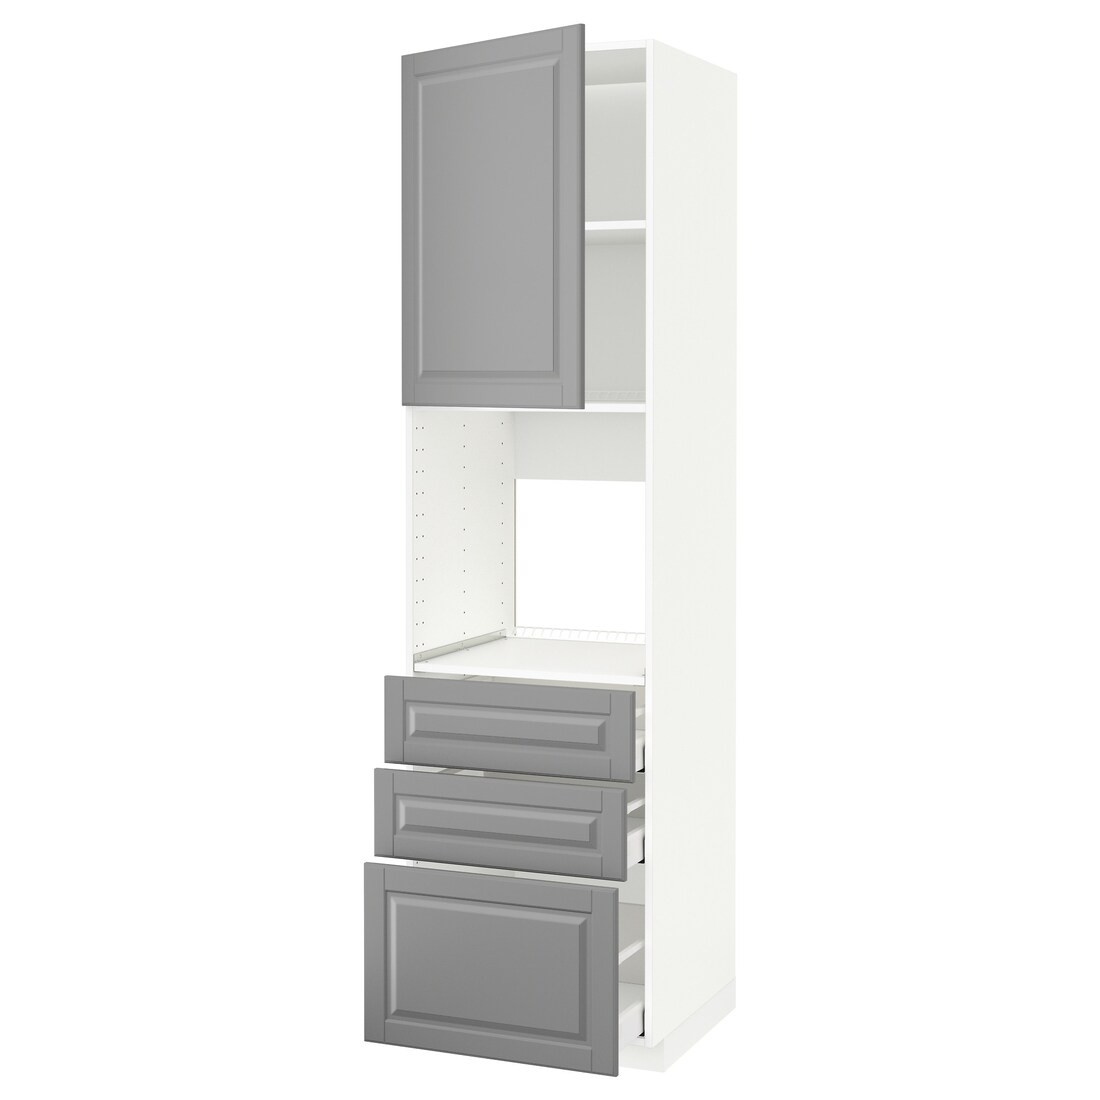 METOD МЕТОД / MAXIMERA МАКСИМЕРА Высокий шкаф для духовки, белый / Bodbyn серый, 60x60x220 см